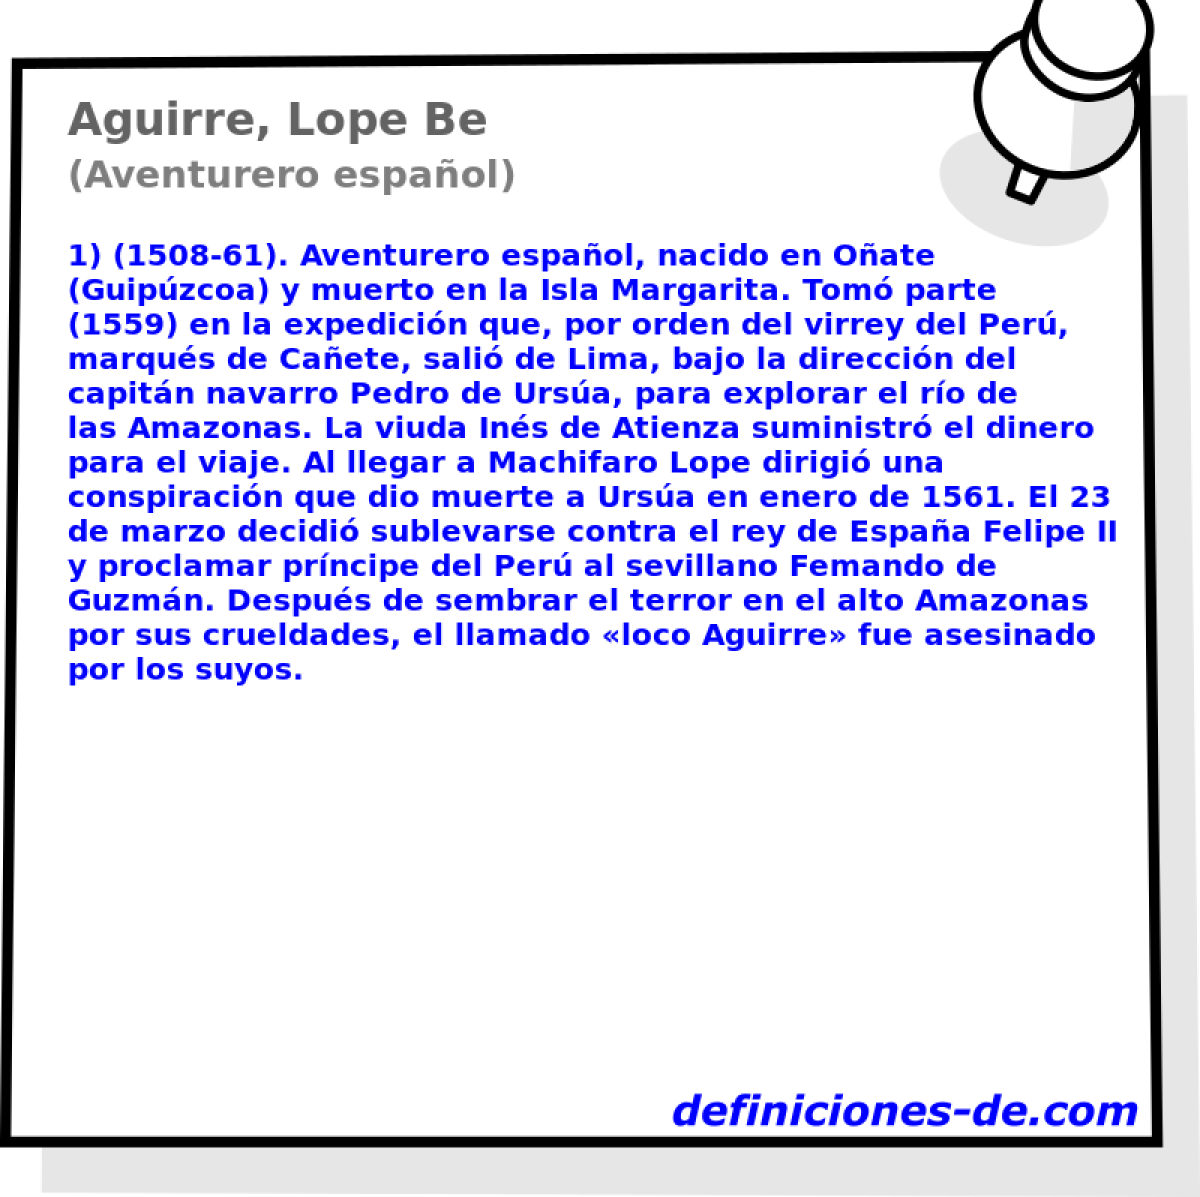 Aguirre, Lope Be (Aventurero espaol)